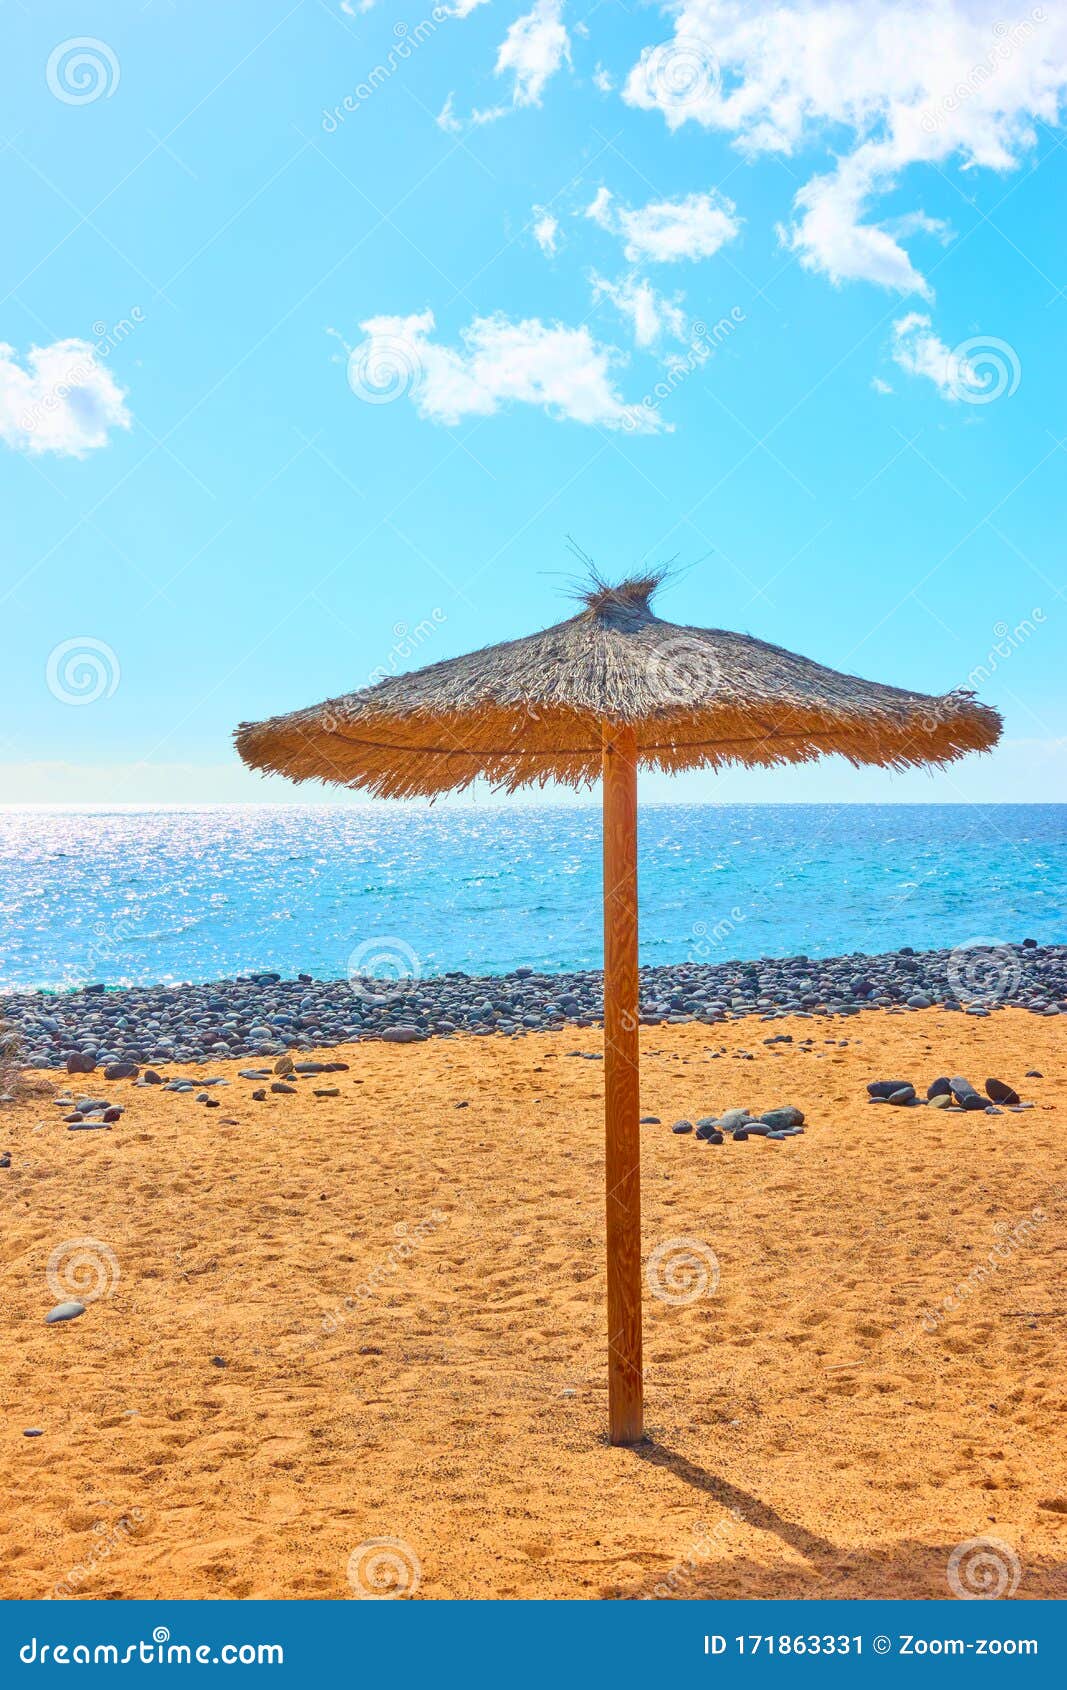 parasol on sandy beach